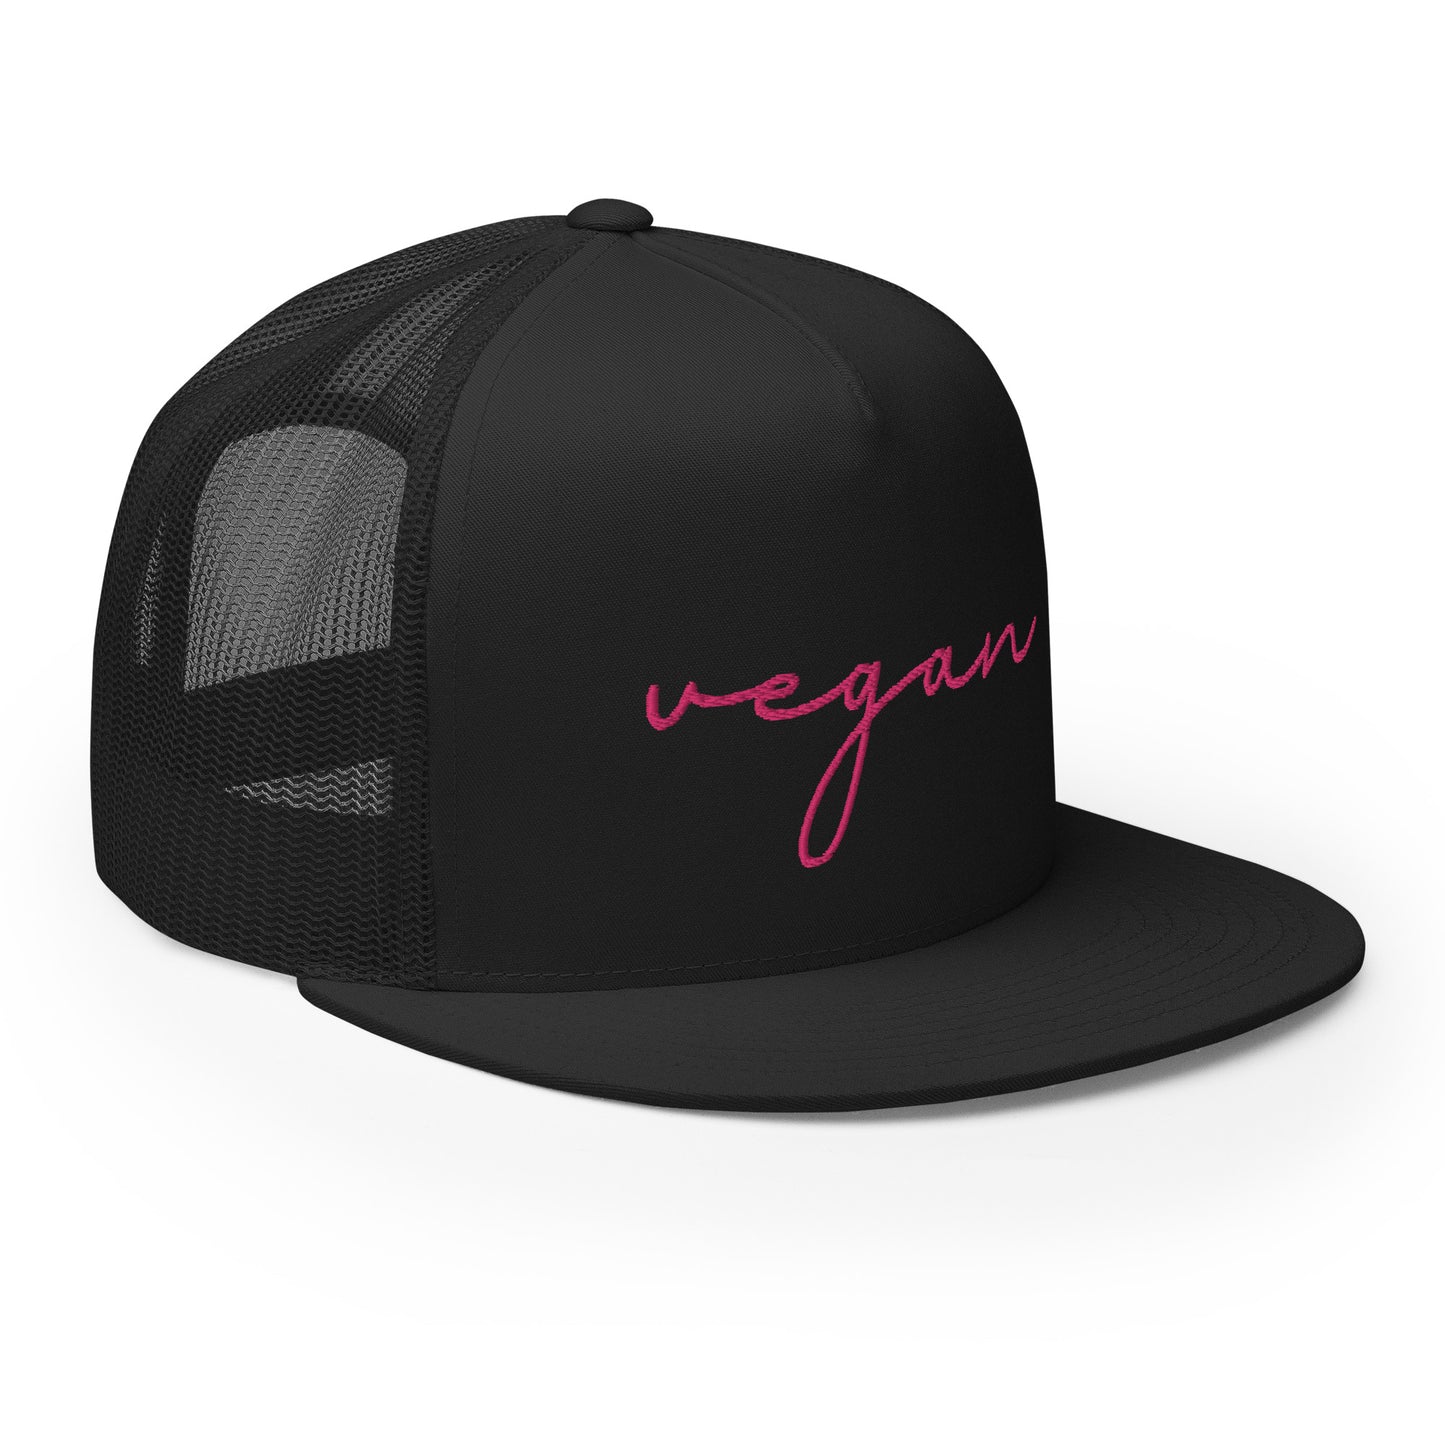 The pink Vegan hat